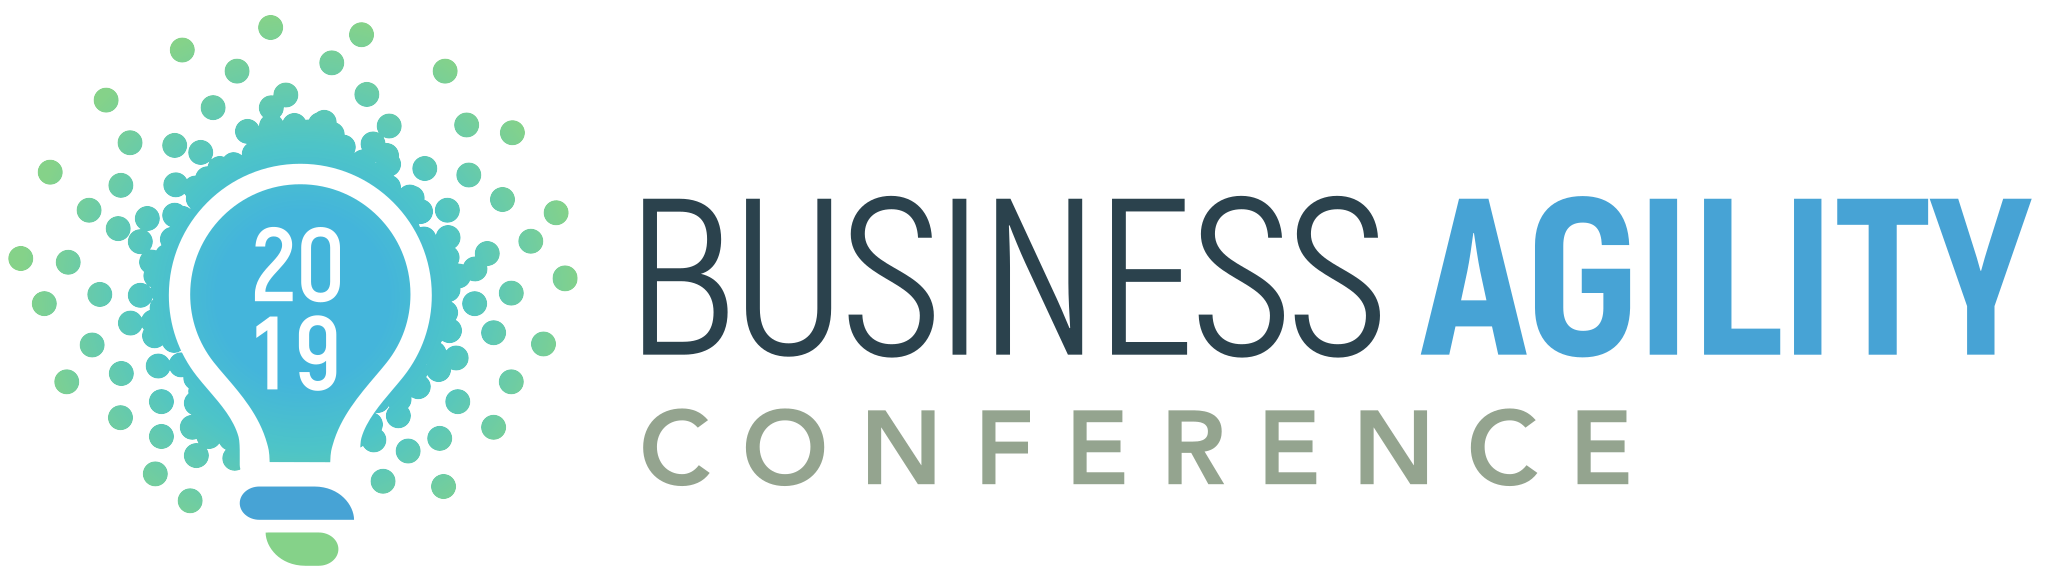 Business Agility Conference 2019 Logo Horizontal